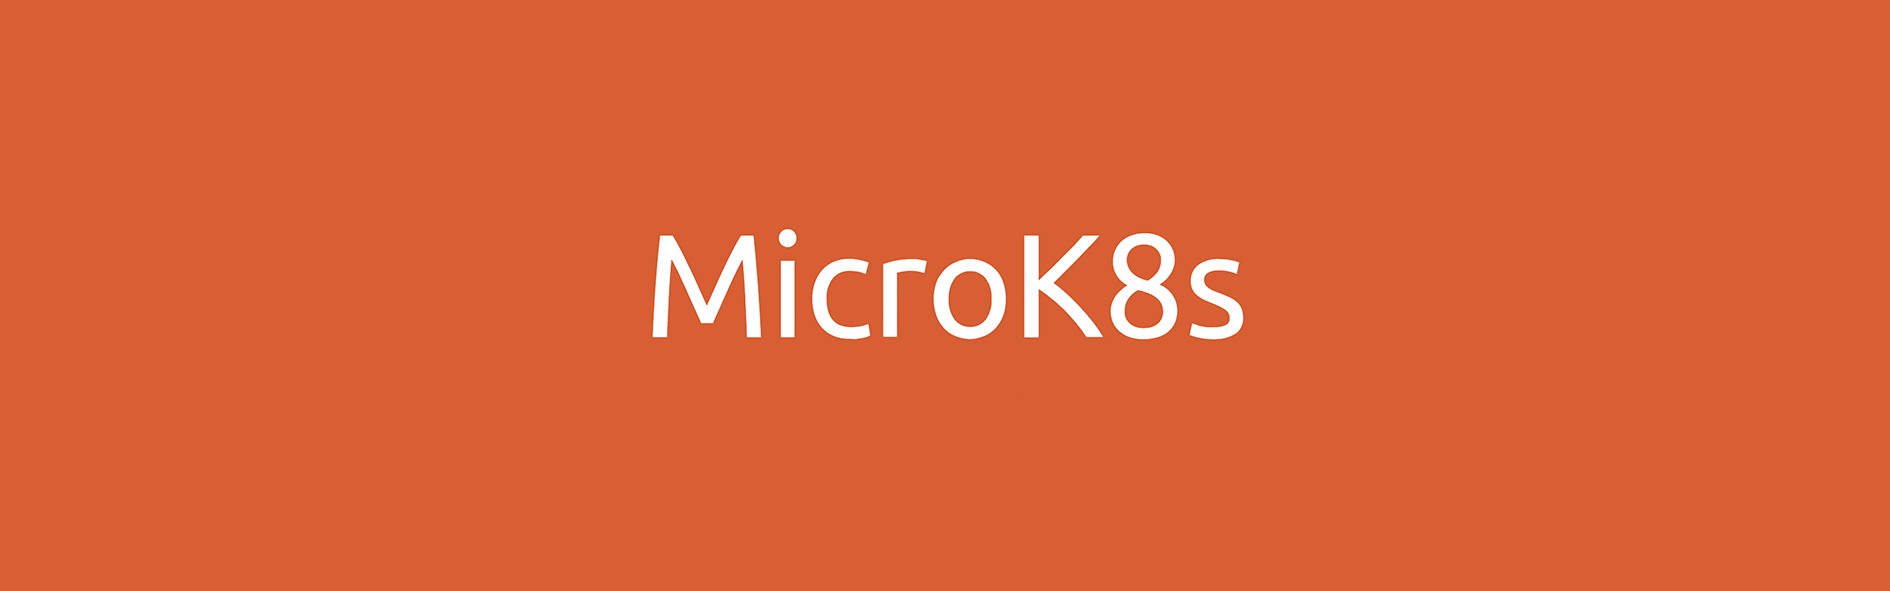 MicroK8s Logo